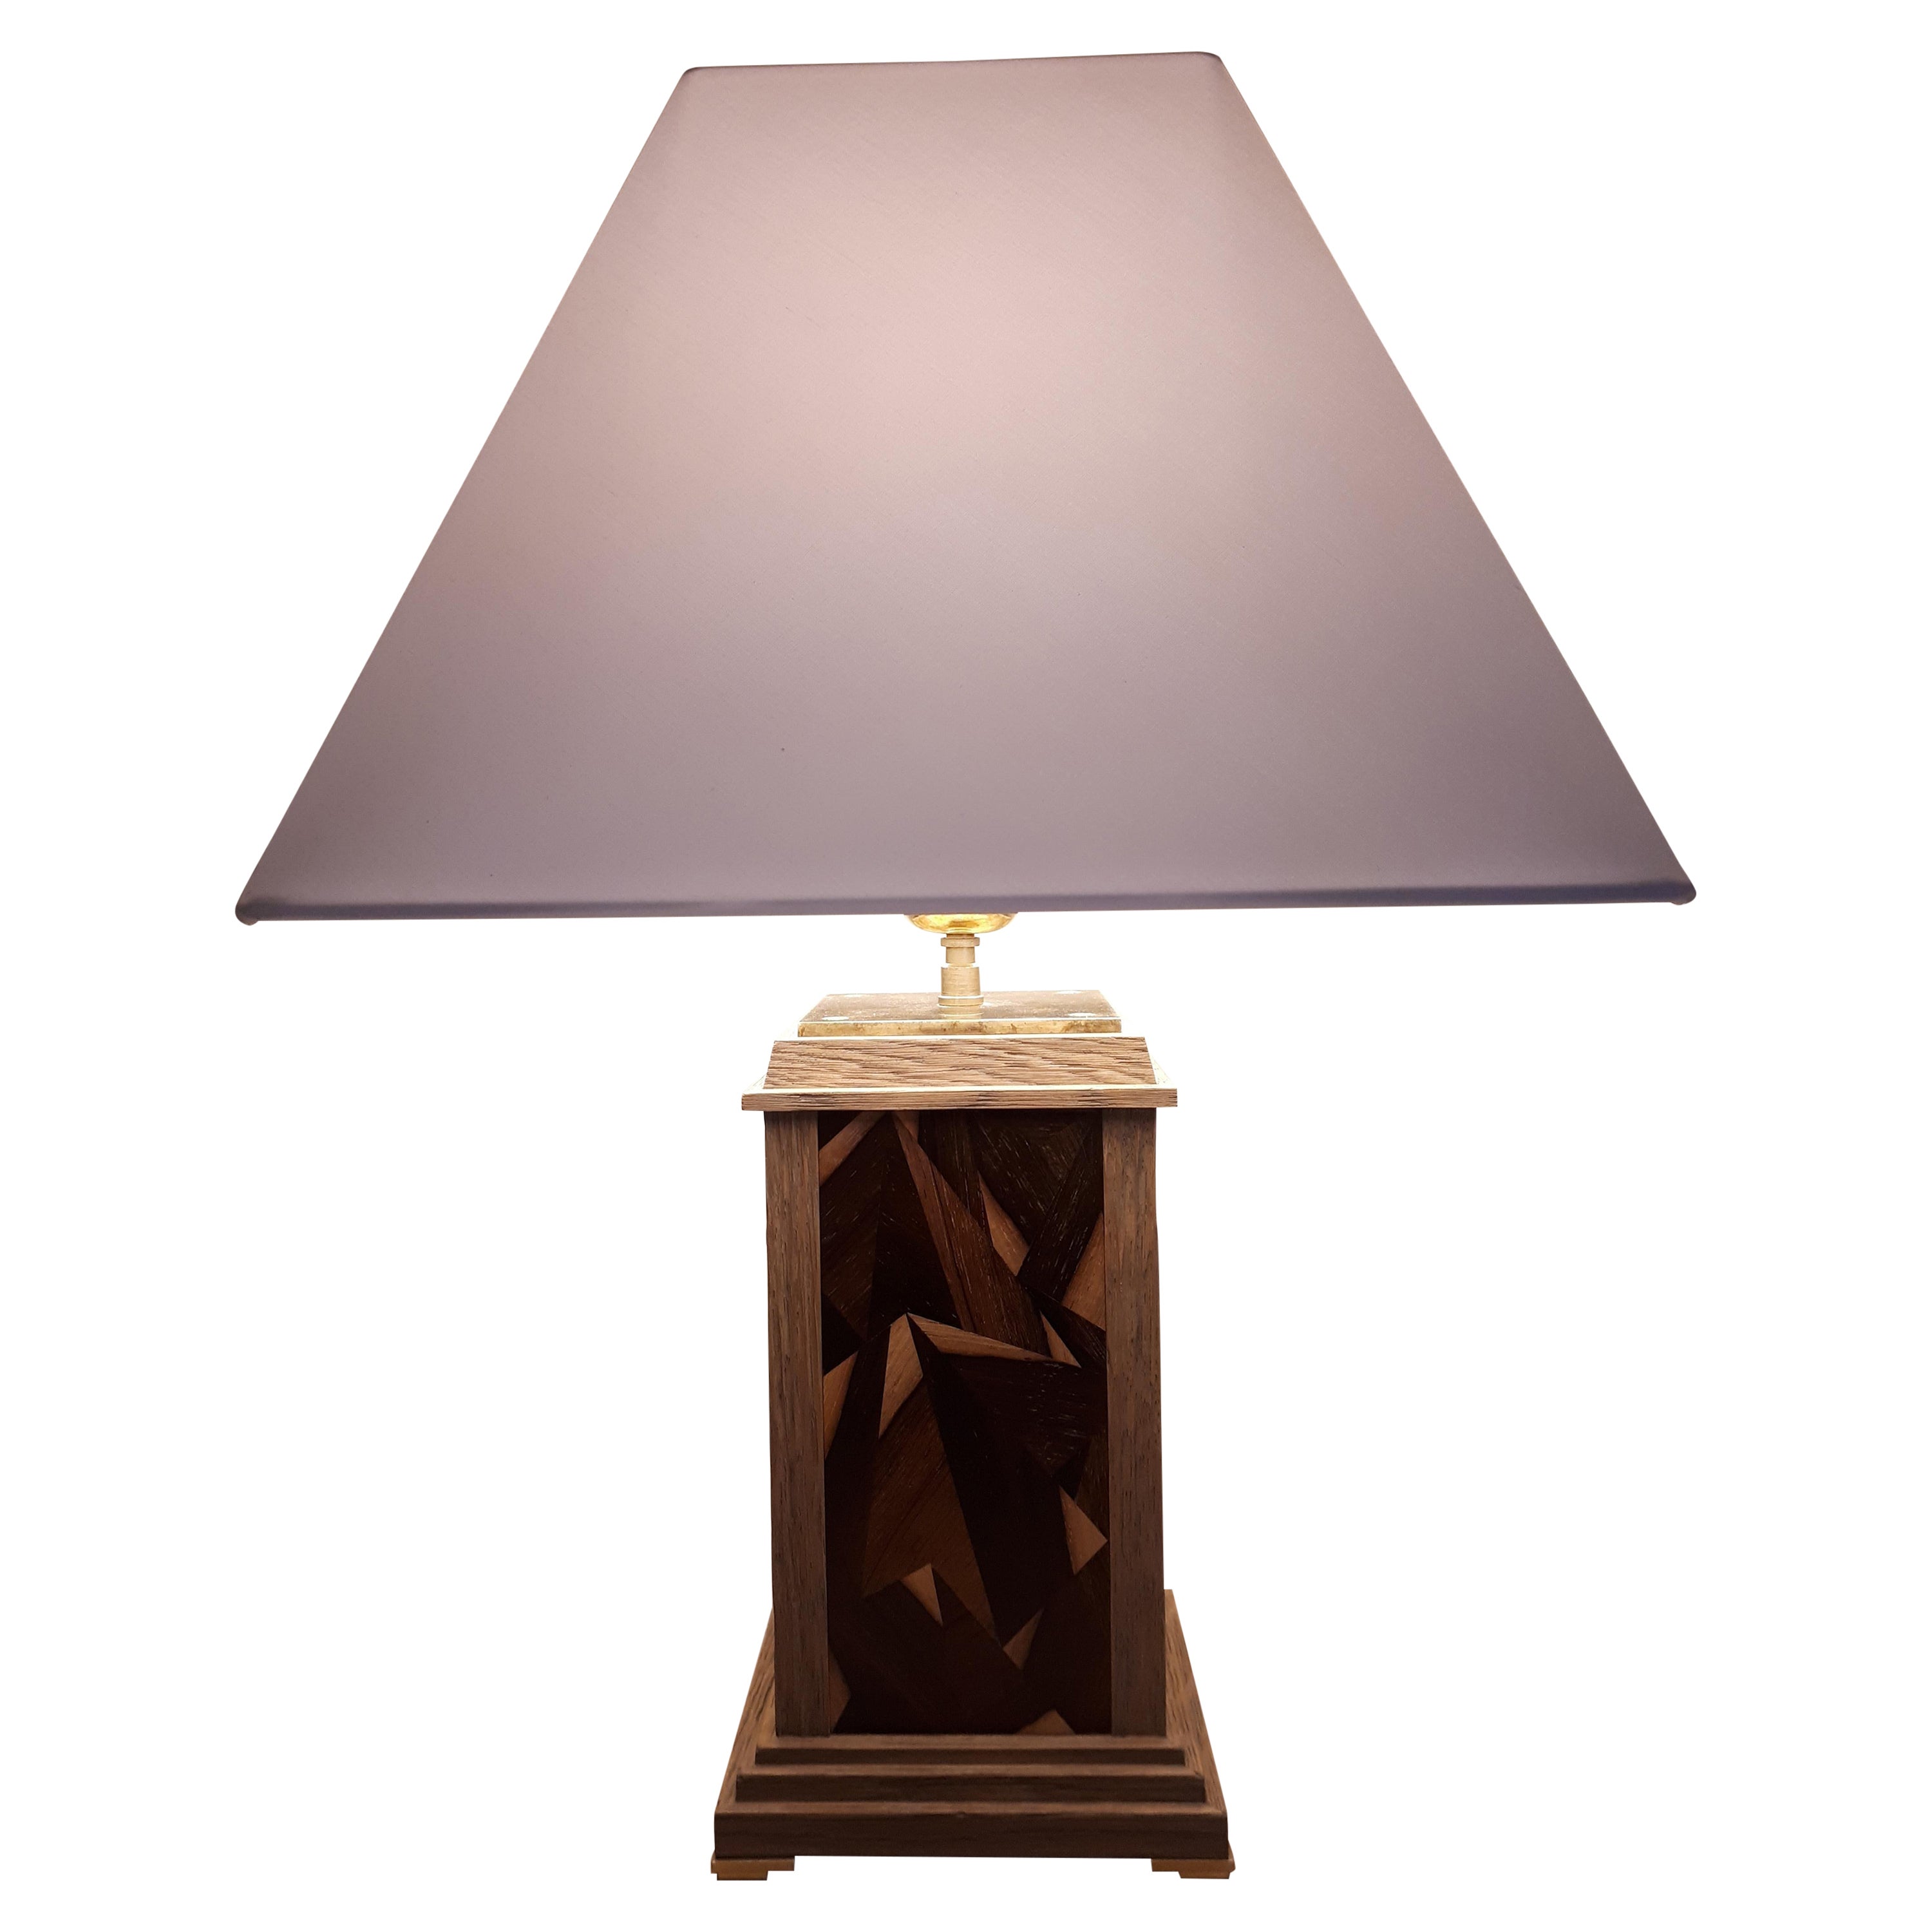 Art Deco style lamp base